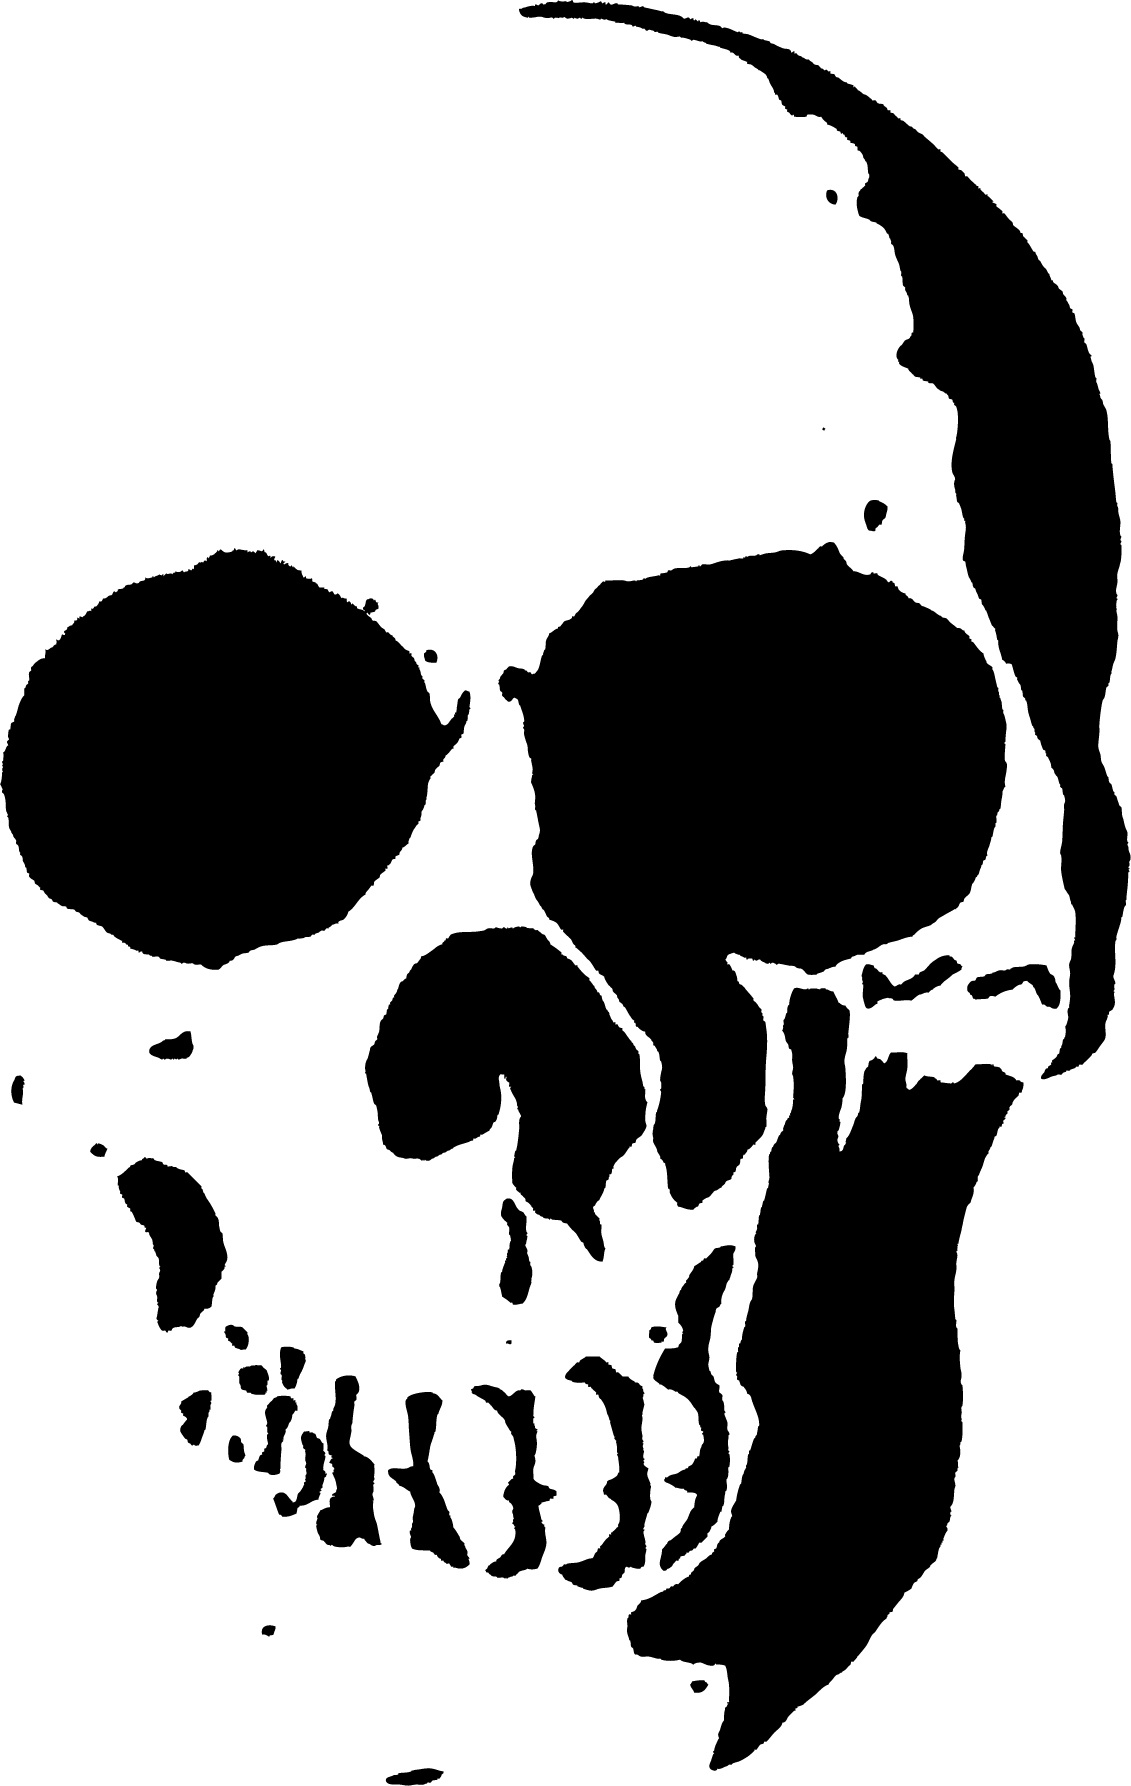 23 Free Skull Stencil Printable Templates | Guide Patterns - Skull Stencils Free Printable